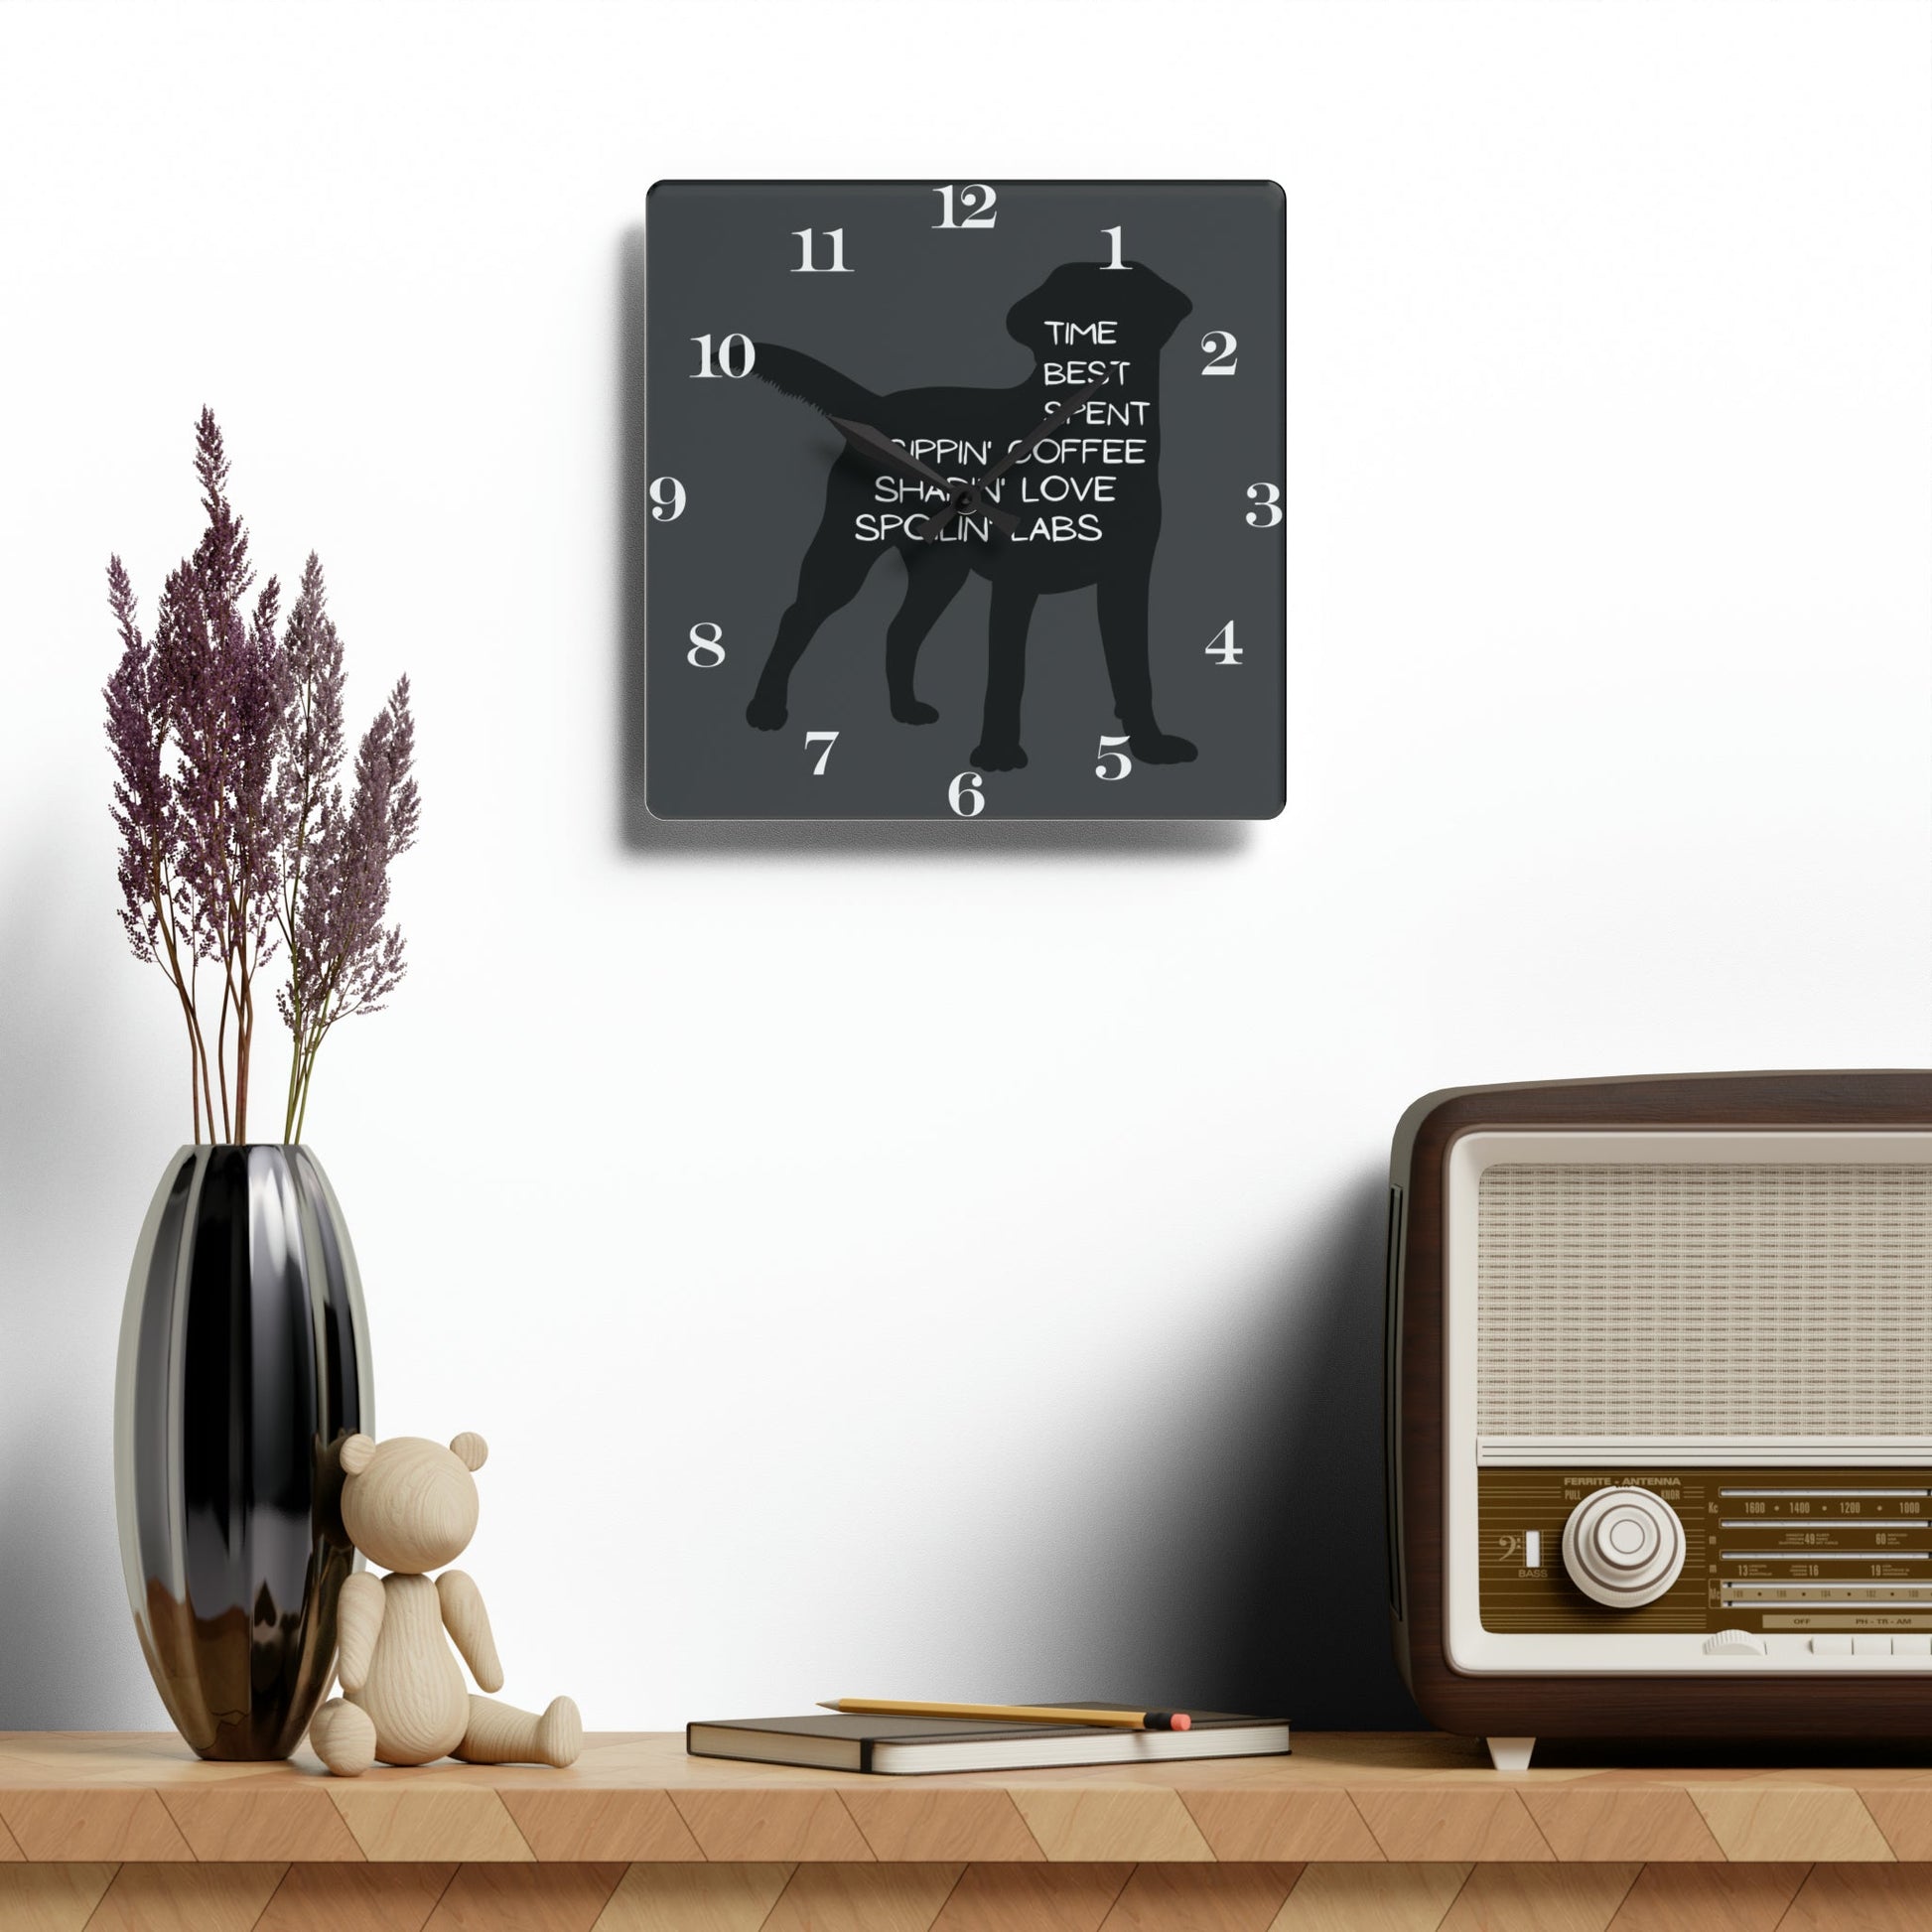 Spoilin’ Labs Wall Clock - Home Decor